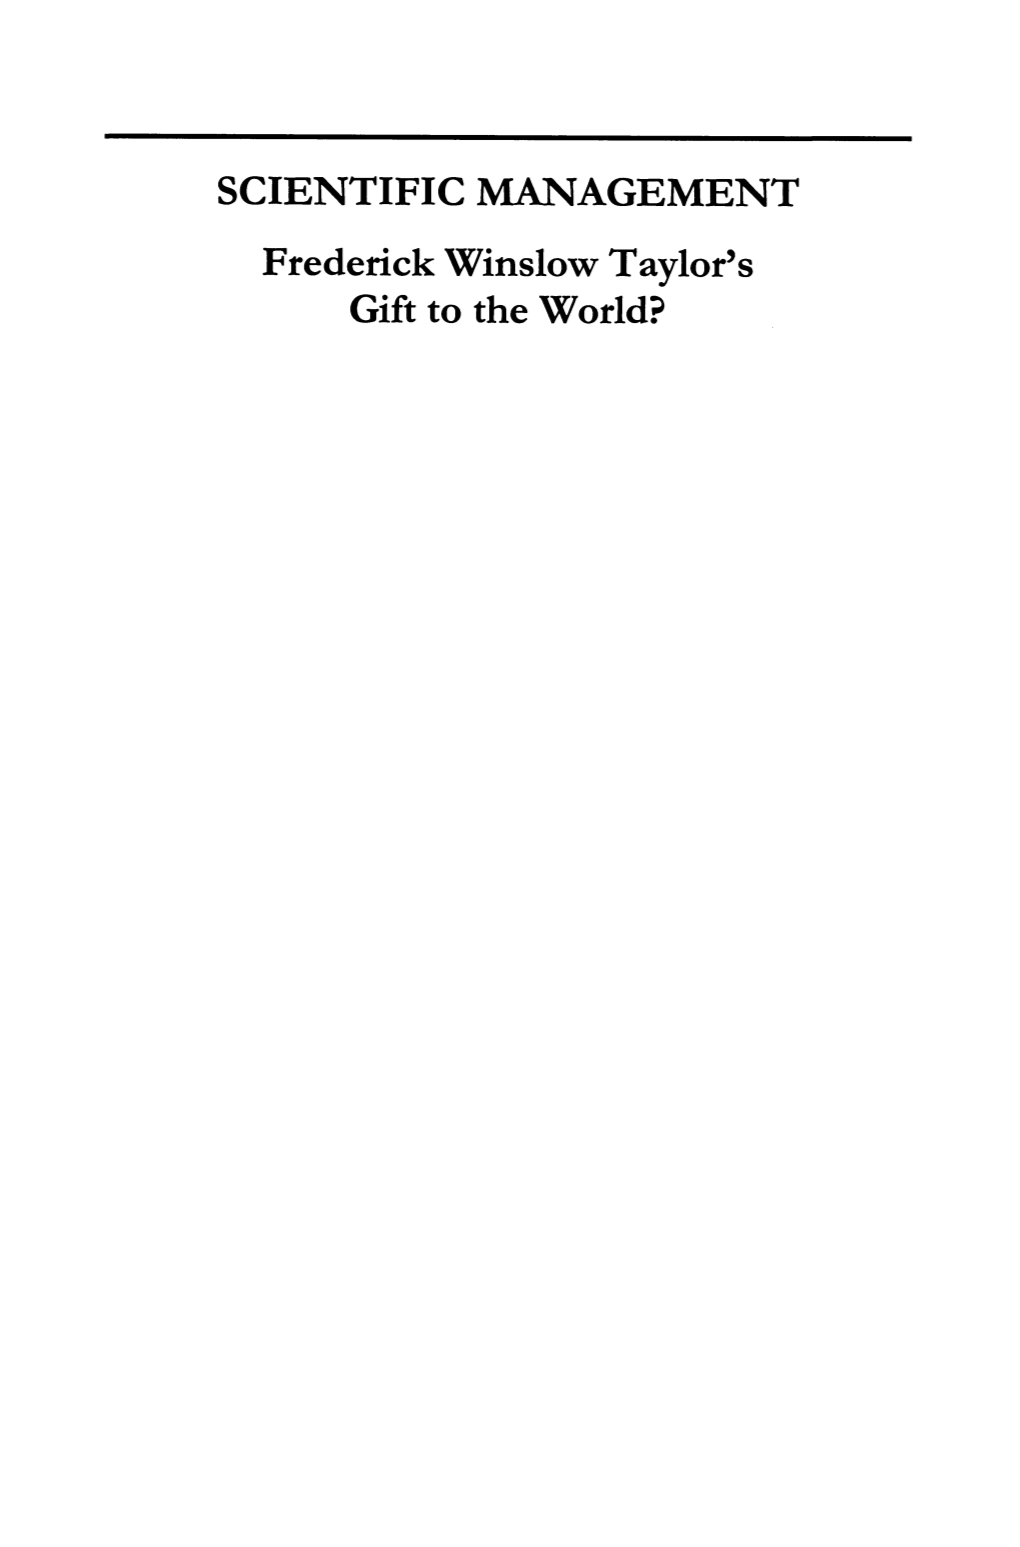 SCIENTIFIC MANAGEMENT Frederick Winslow Taylor's Gift to the World? SCIENTIFIC MANAGEMENT Frederick Winslow Taylor's Gift to the World?